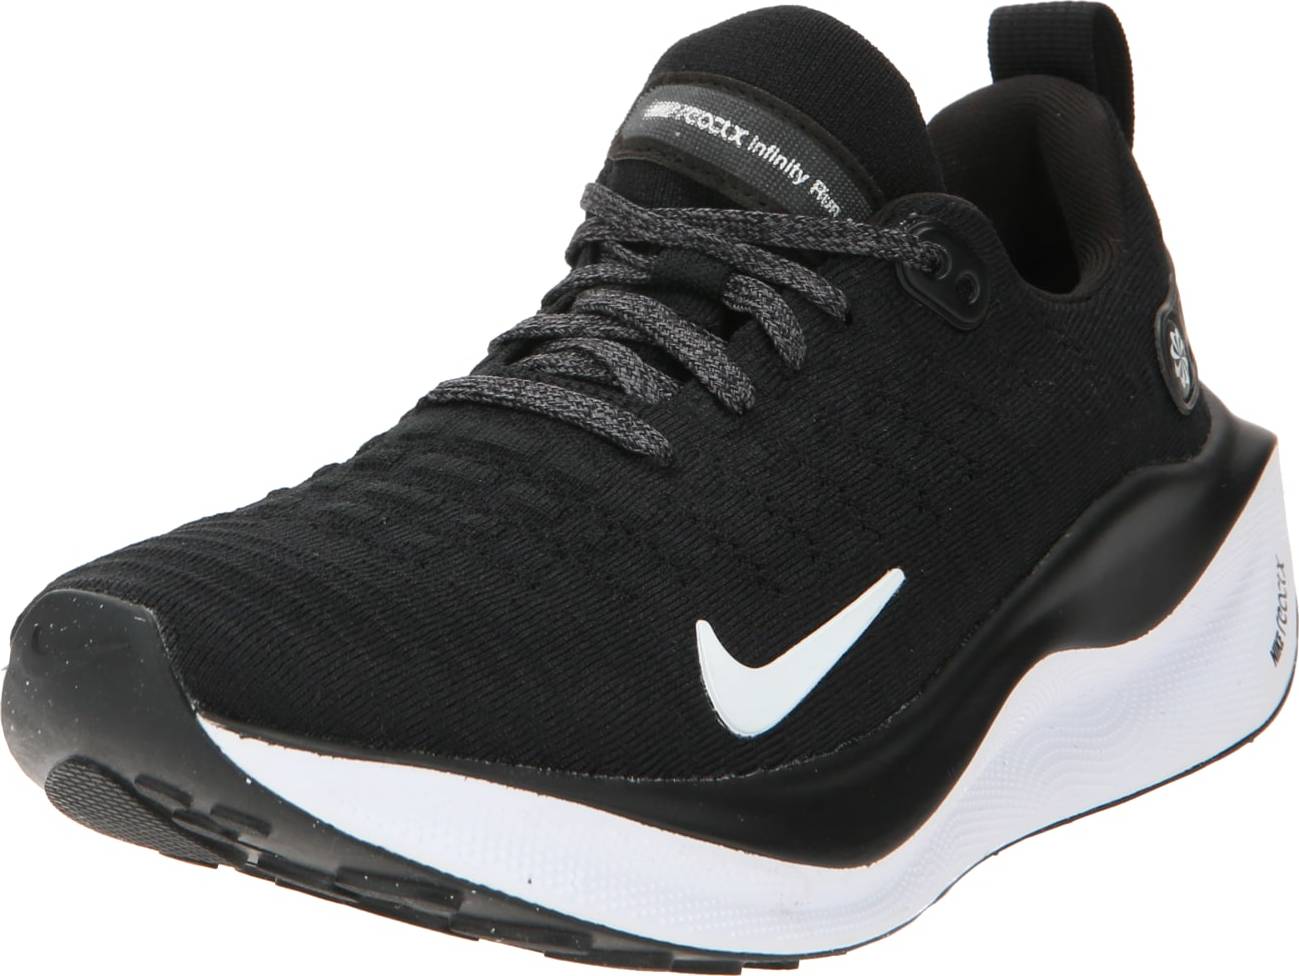 Běžecká obuv 'React Infinity Run' Nike černá / bílá